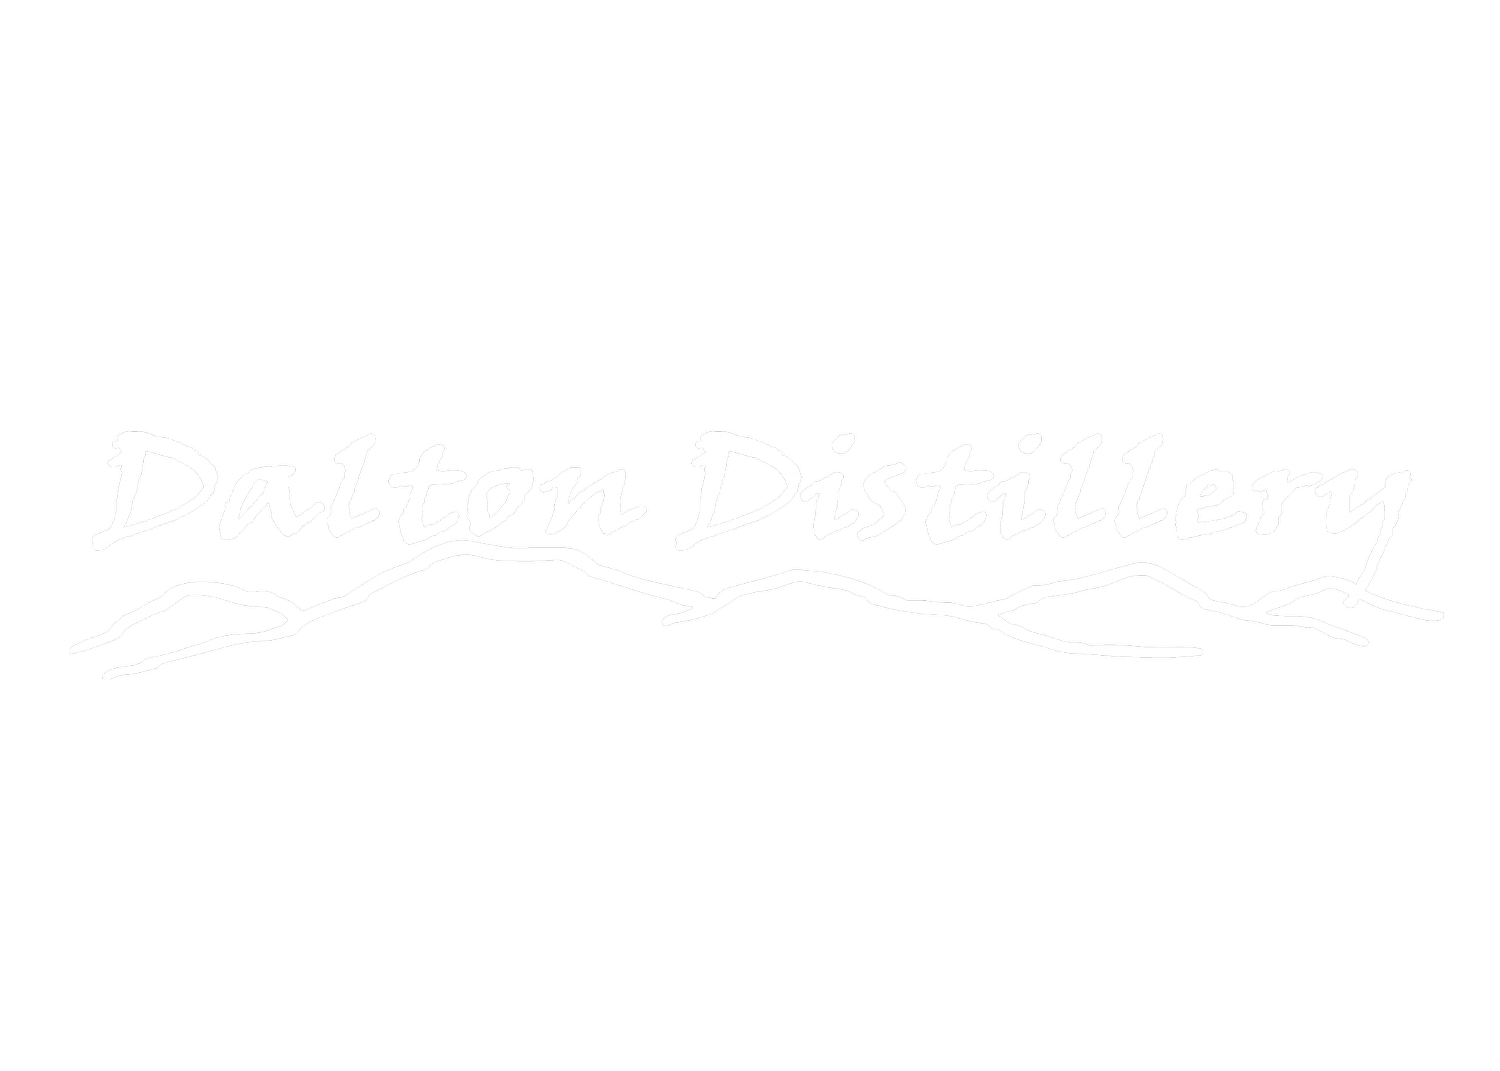 Dalton Distillery